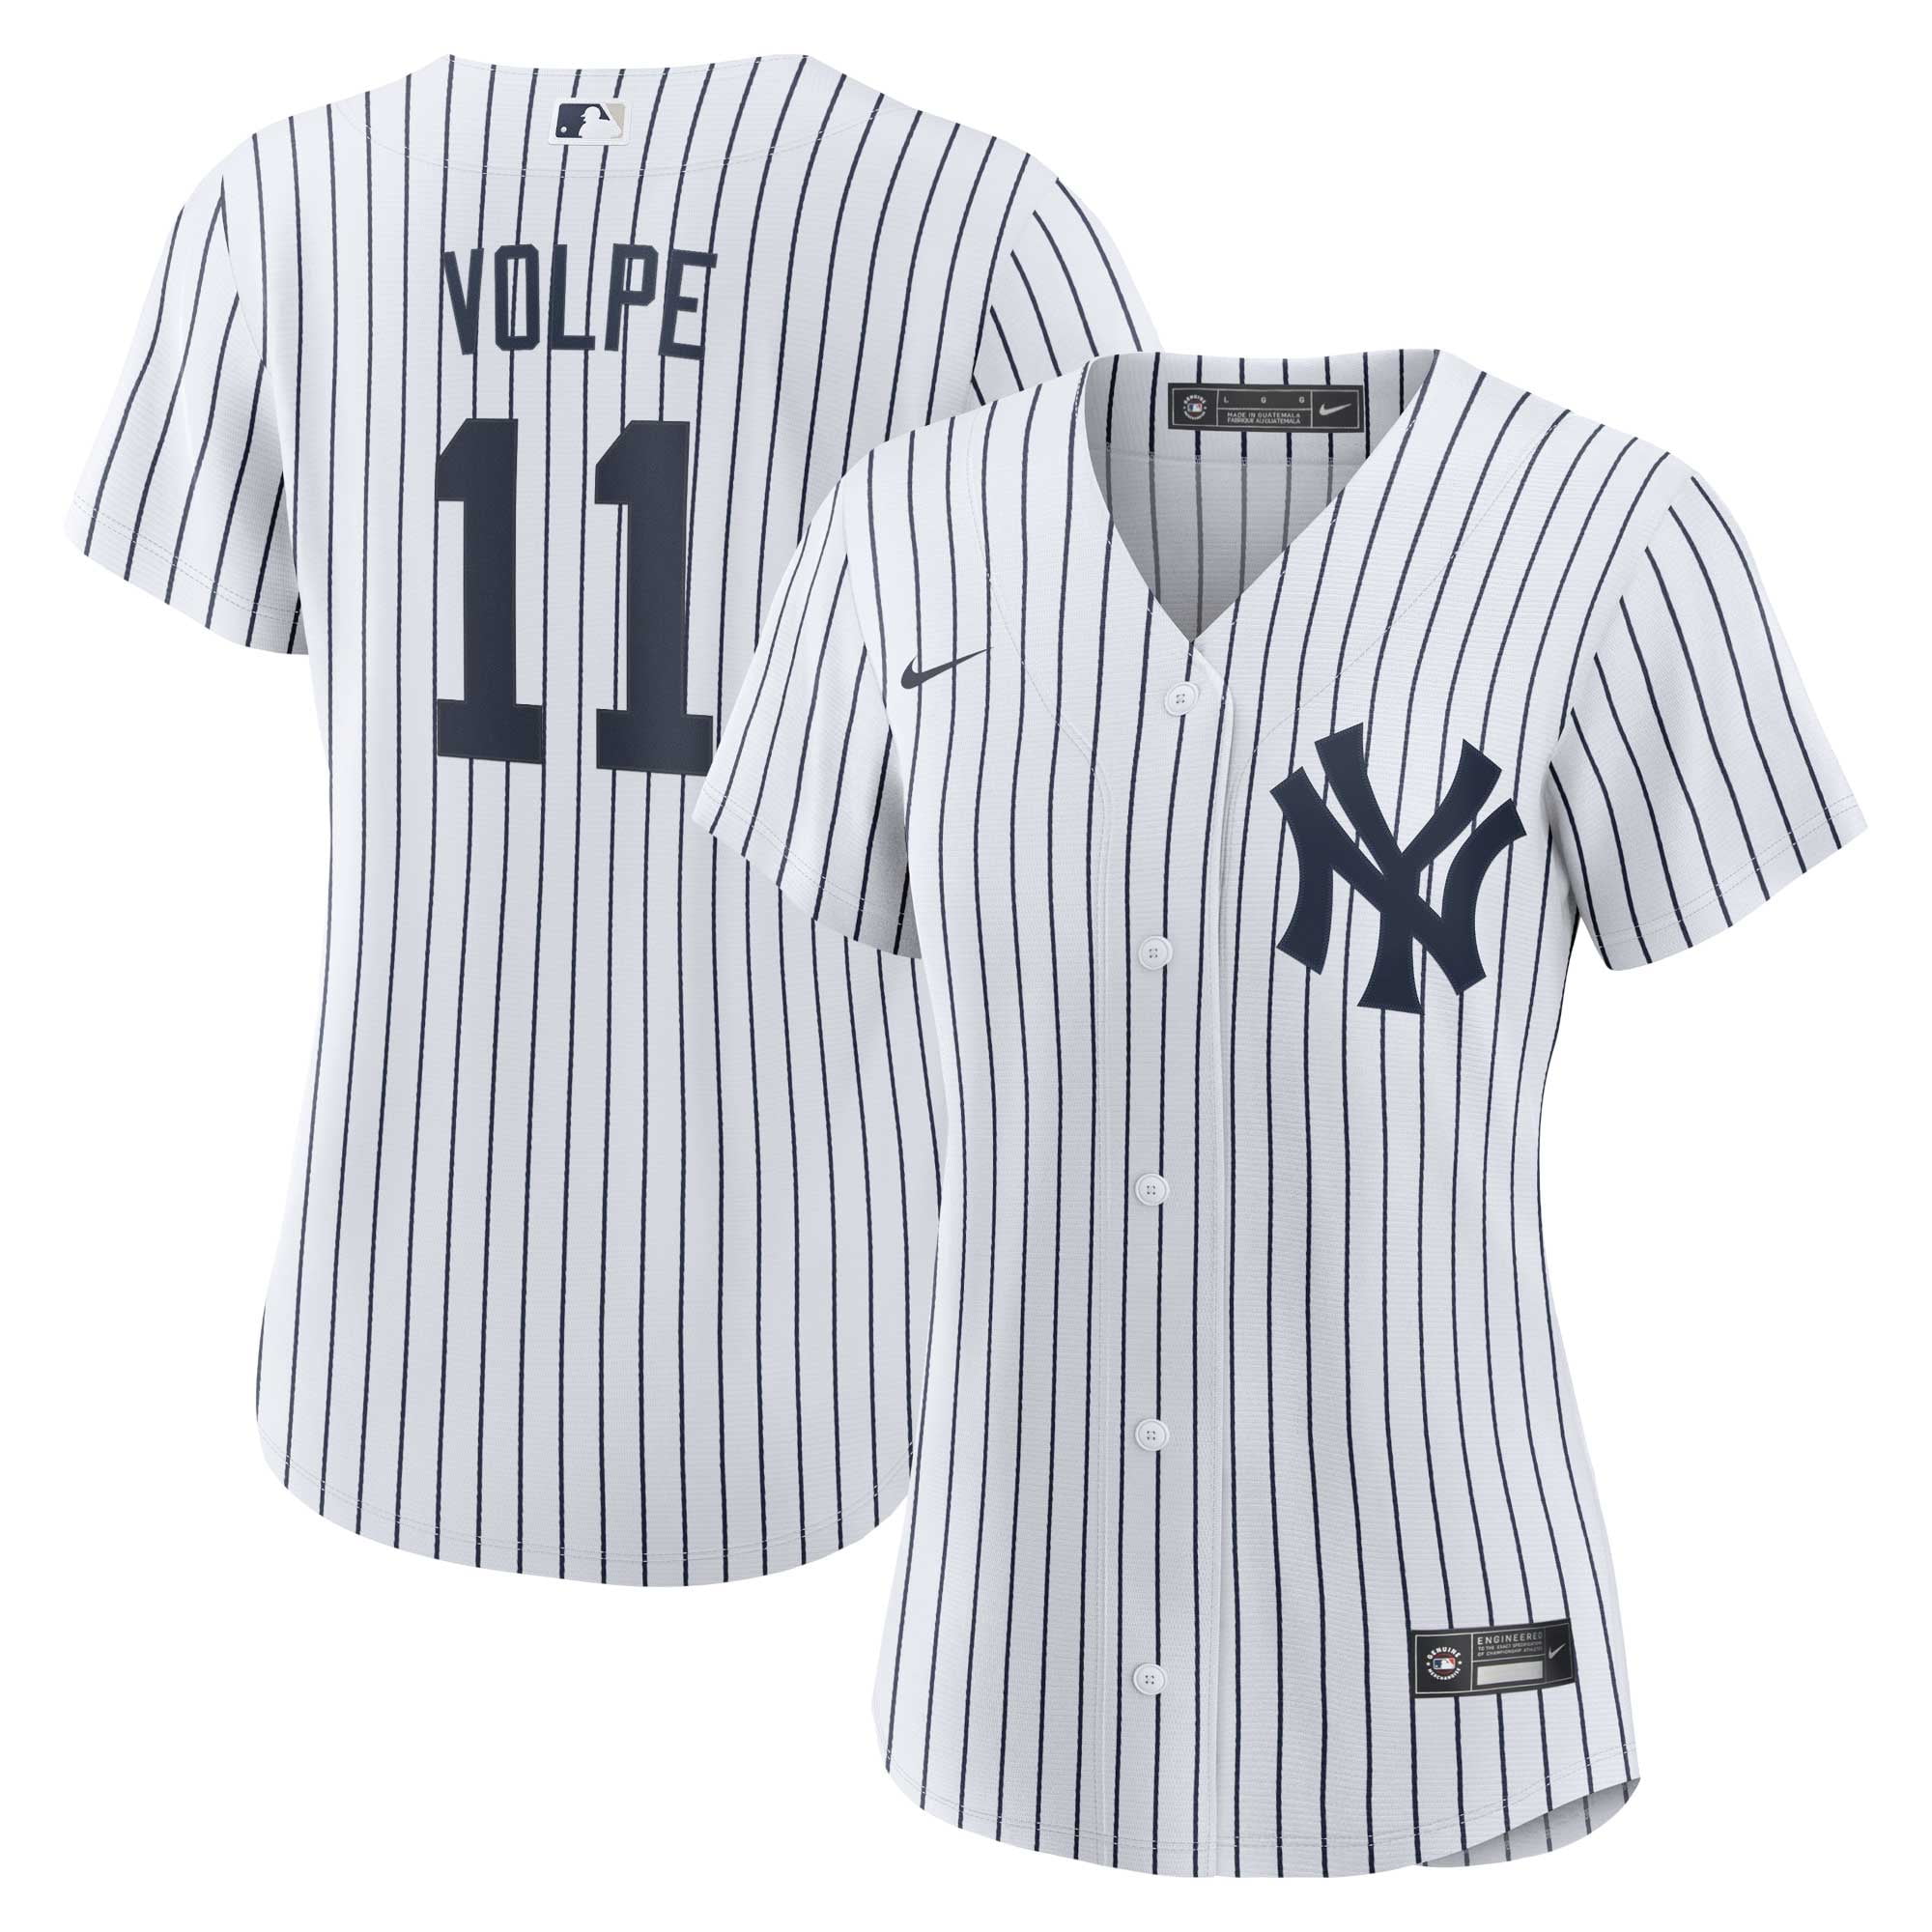 DJ LeMahieu New York Yankees Autographed Nike White Replica Jersey